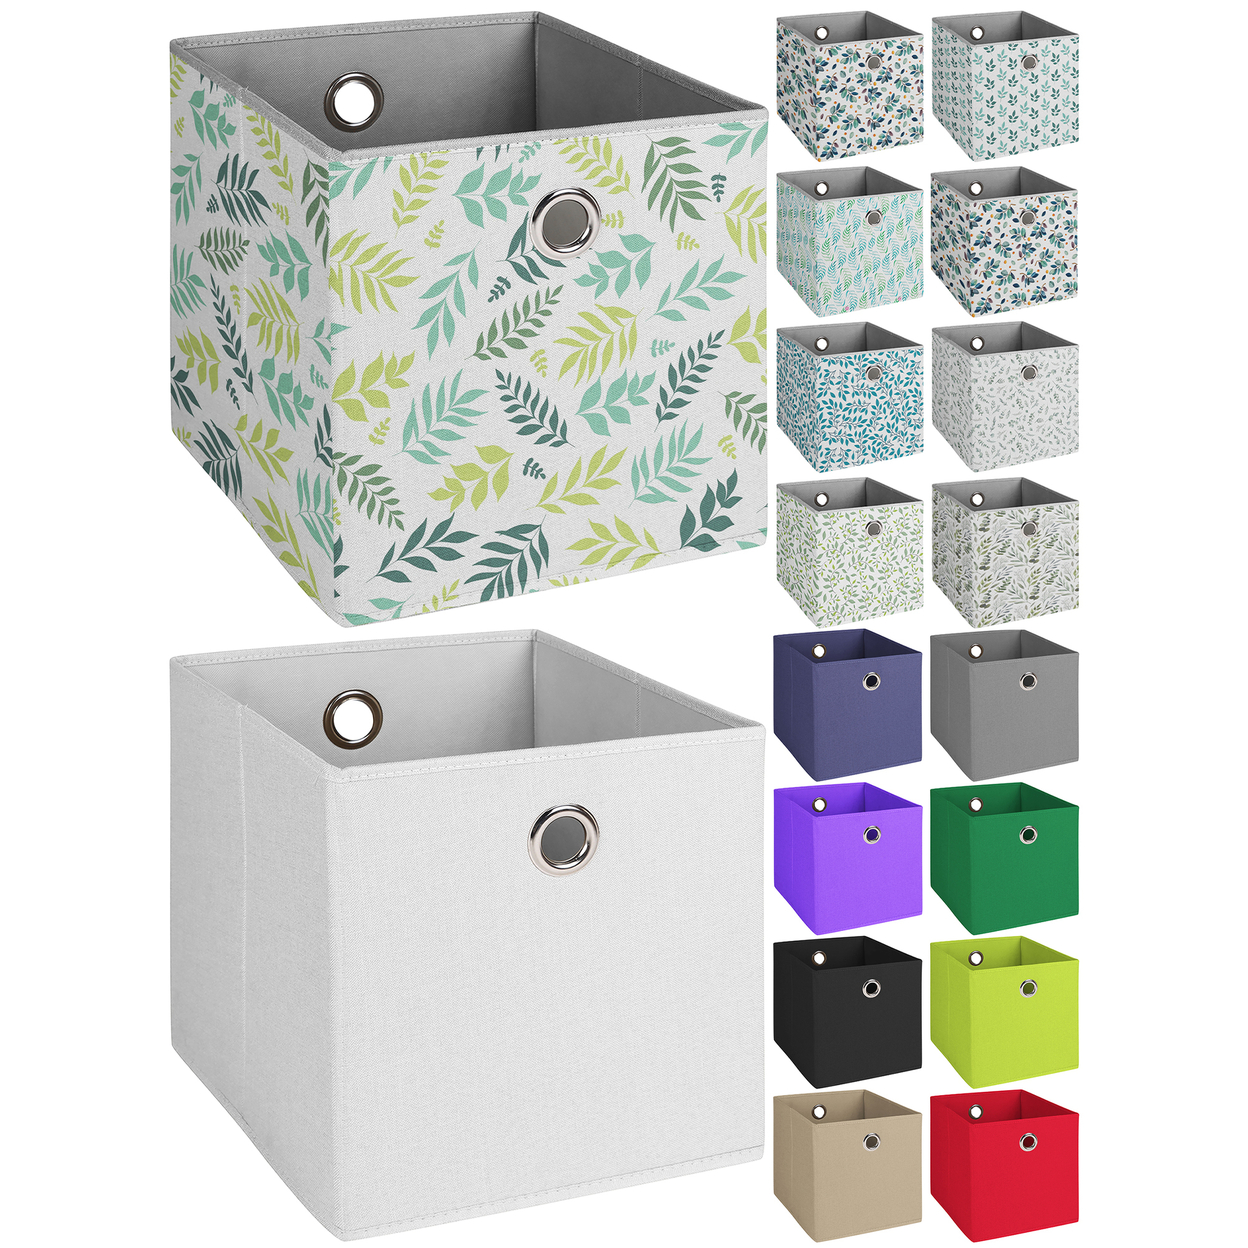 2-Pack: Multipurpose Stackable Basic Fabric Collapsible Storage Bin Cube Organizer - Print